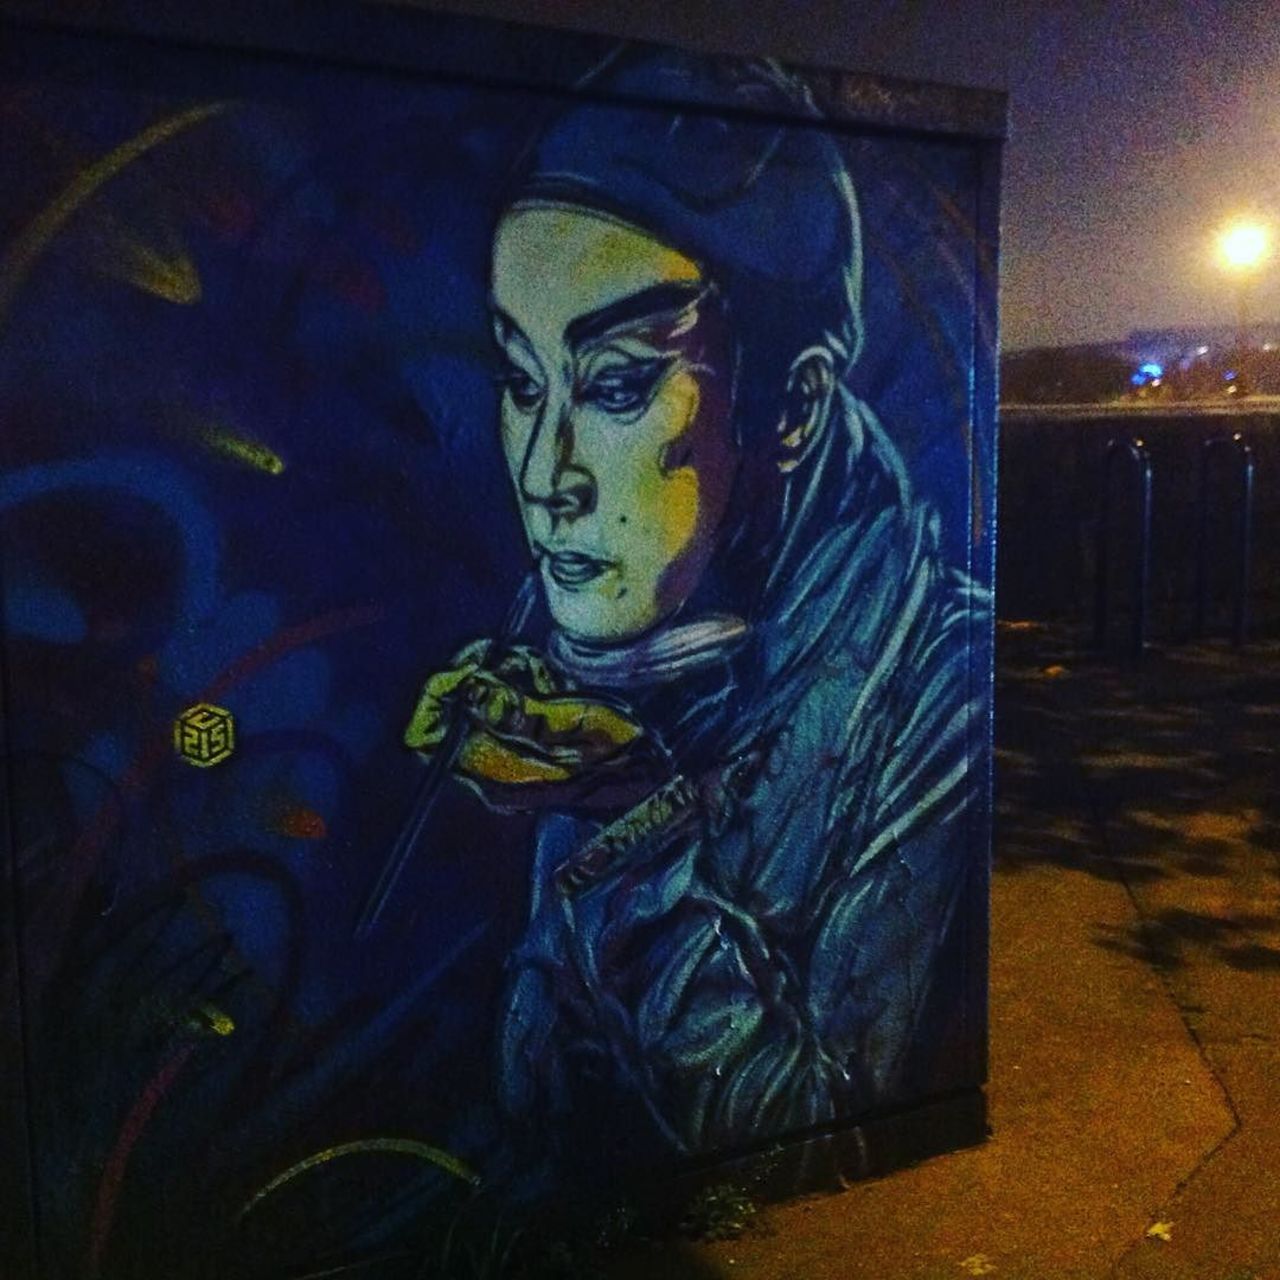 #Paris #graffiti photo by @stefetlinda http://ift.tt/1S6NqbZ #StreetArt https://t.co/msIrqJdLha